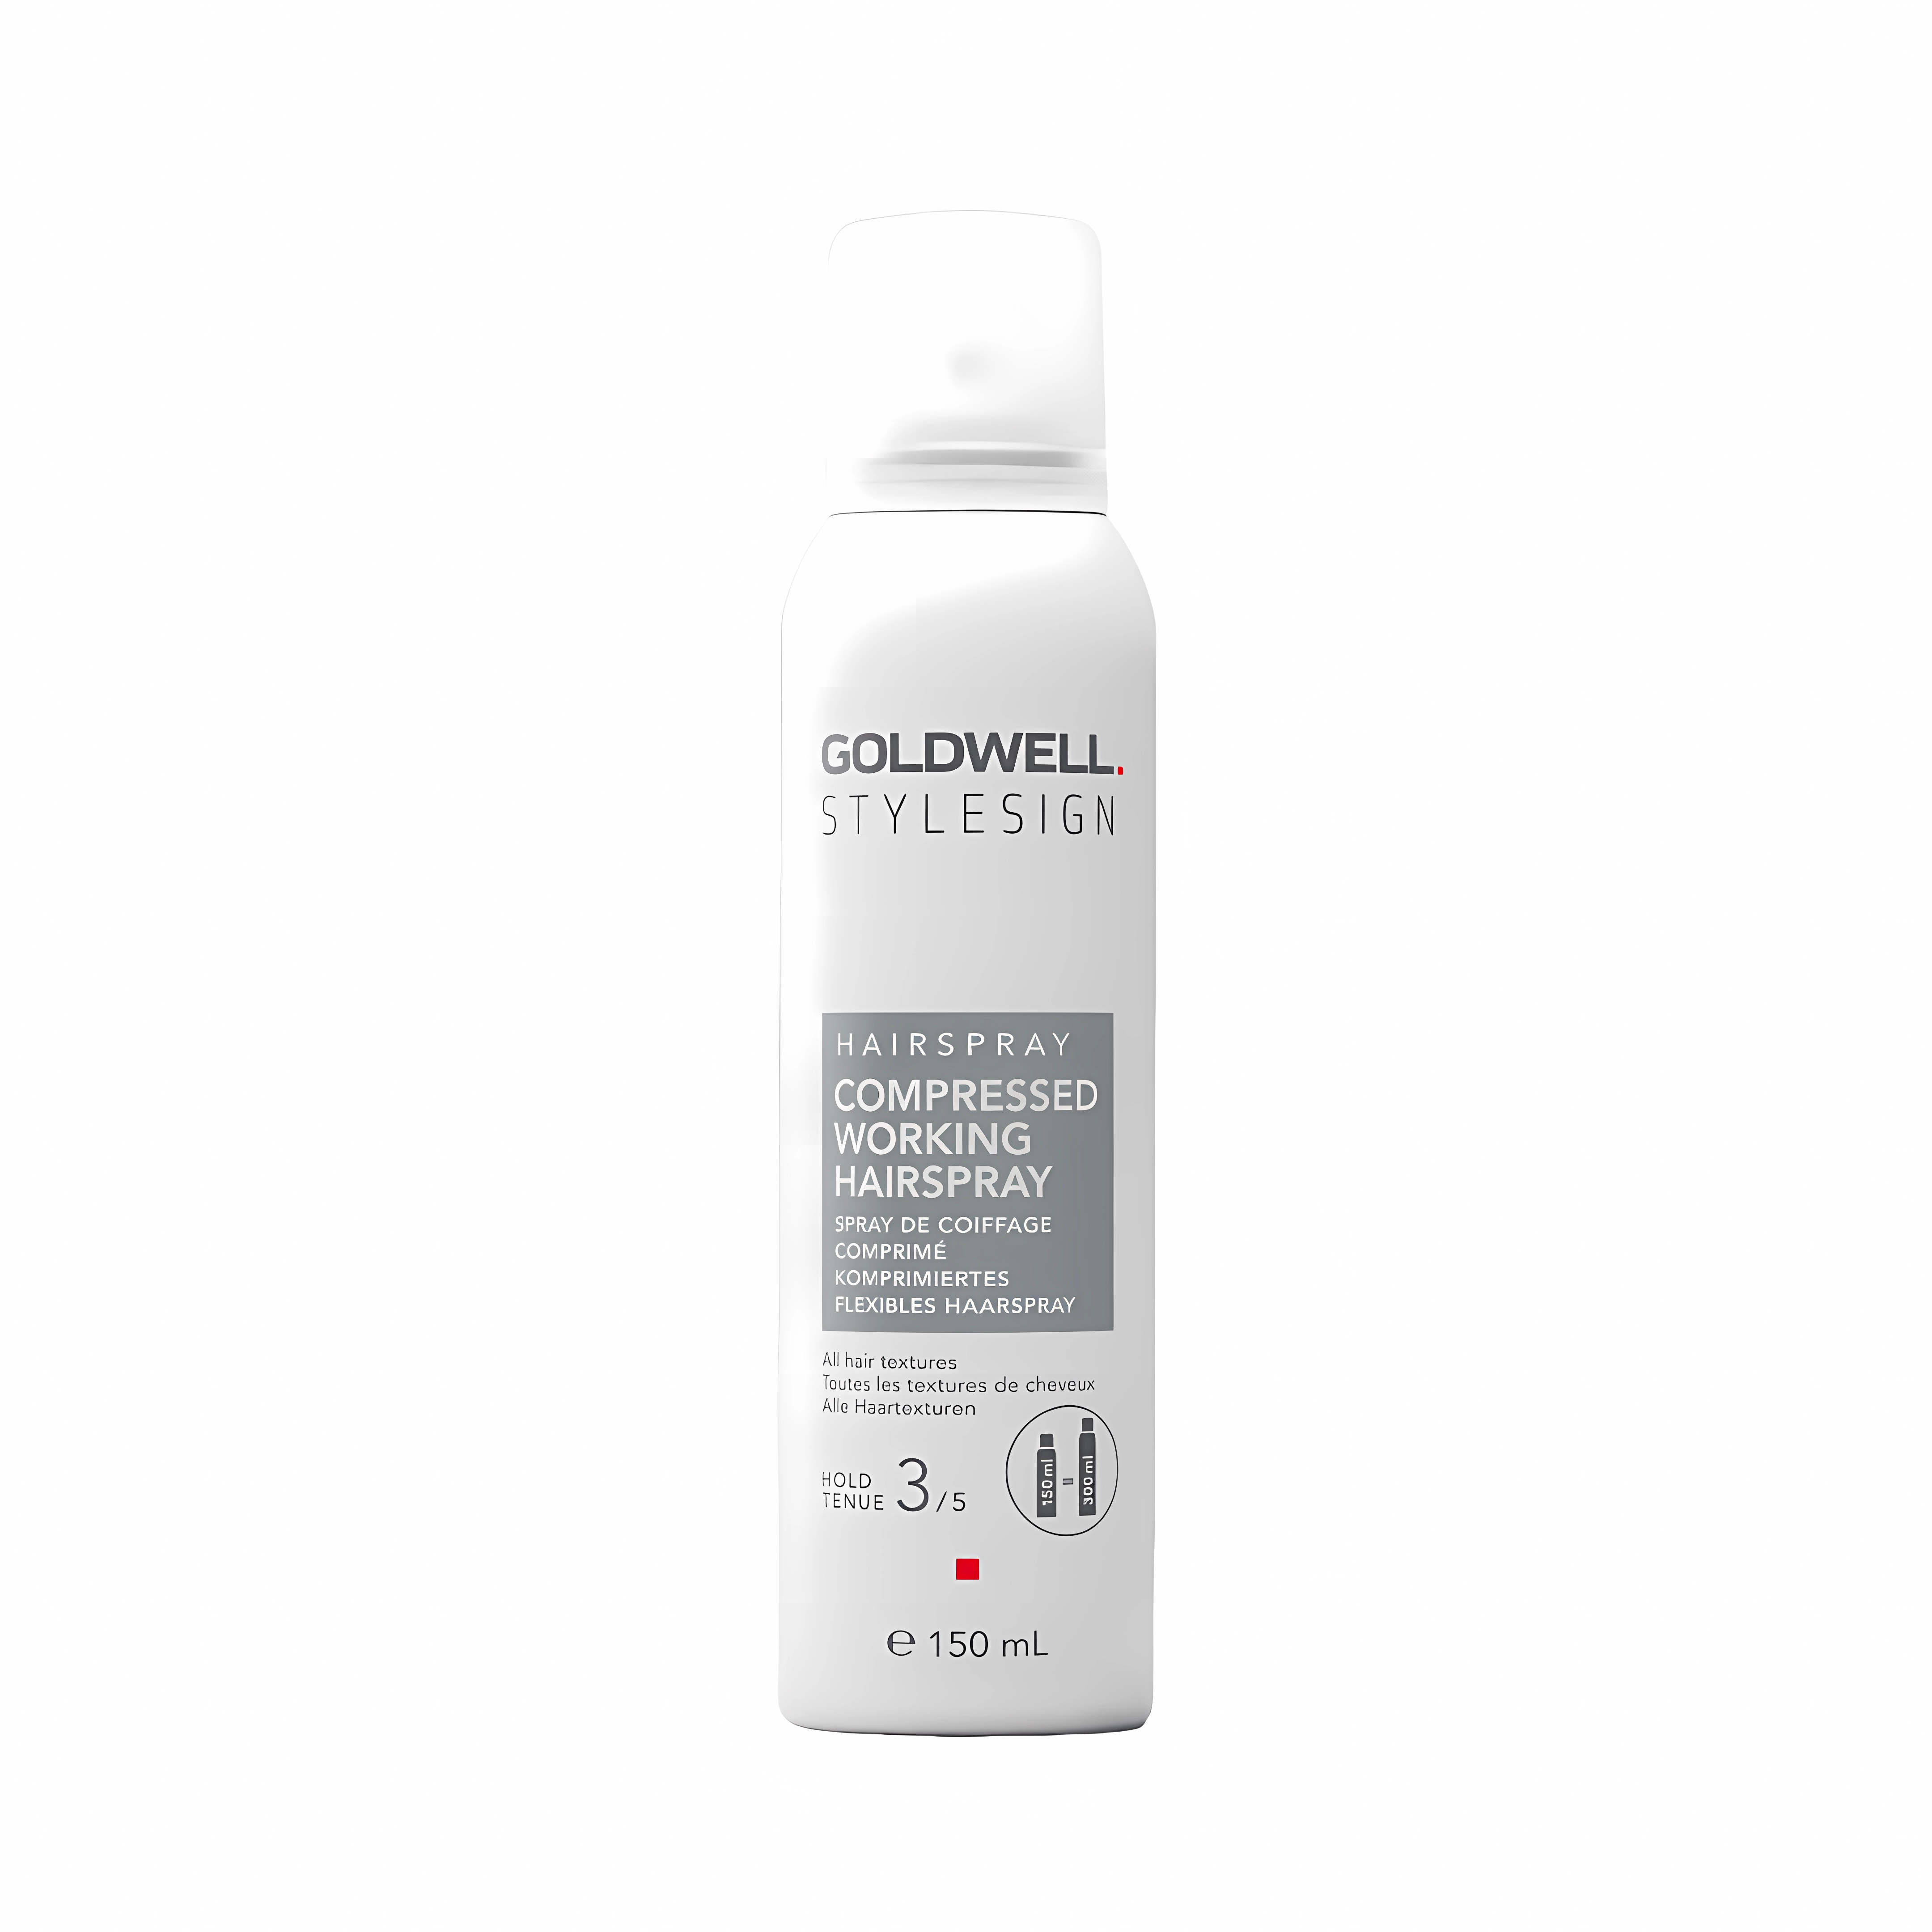 GOLDWELL Goldwell StyleSign Hairspray Compressed Working Hairspray 150 ml